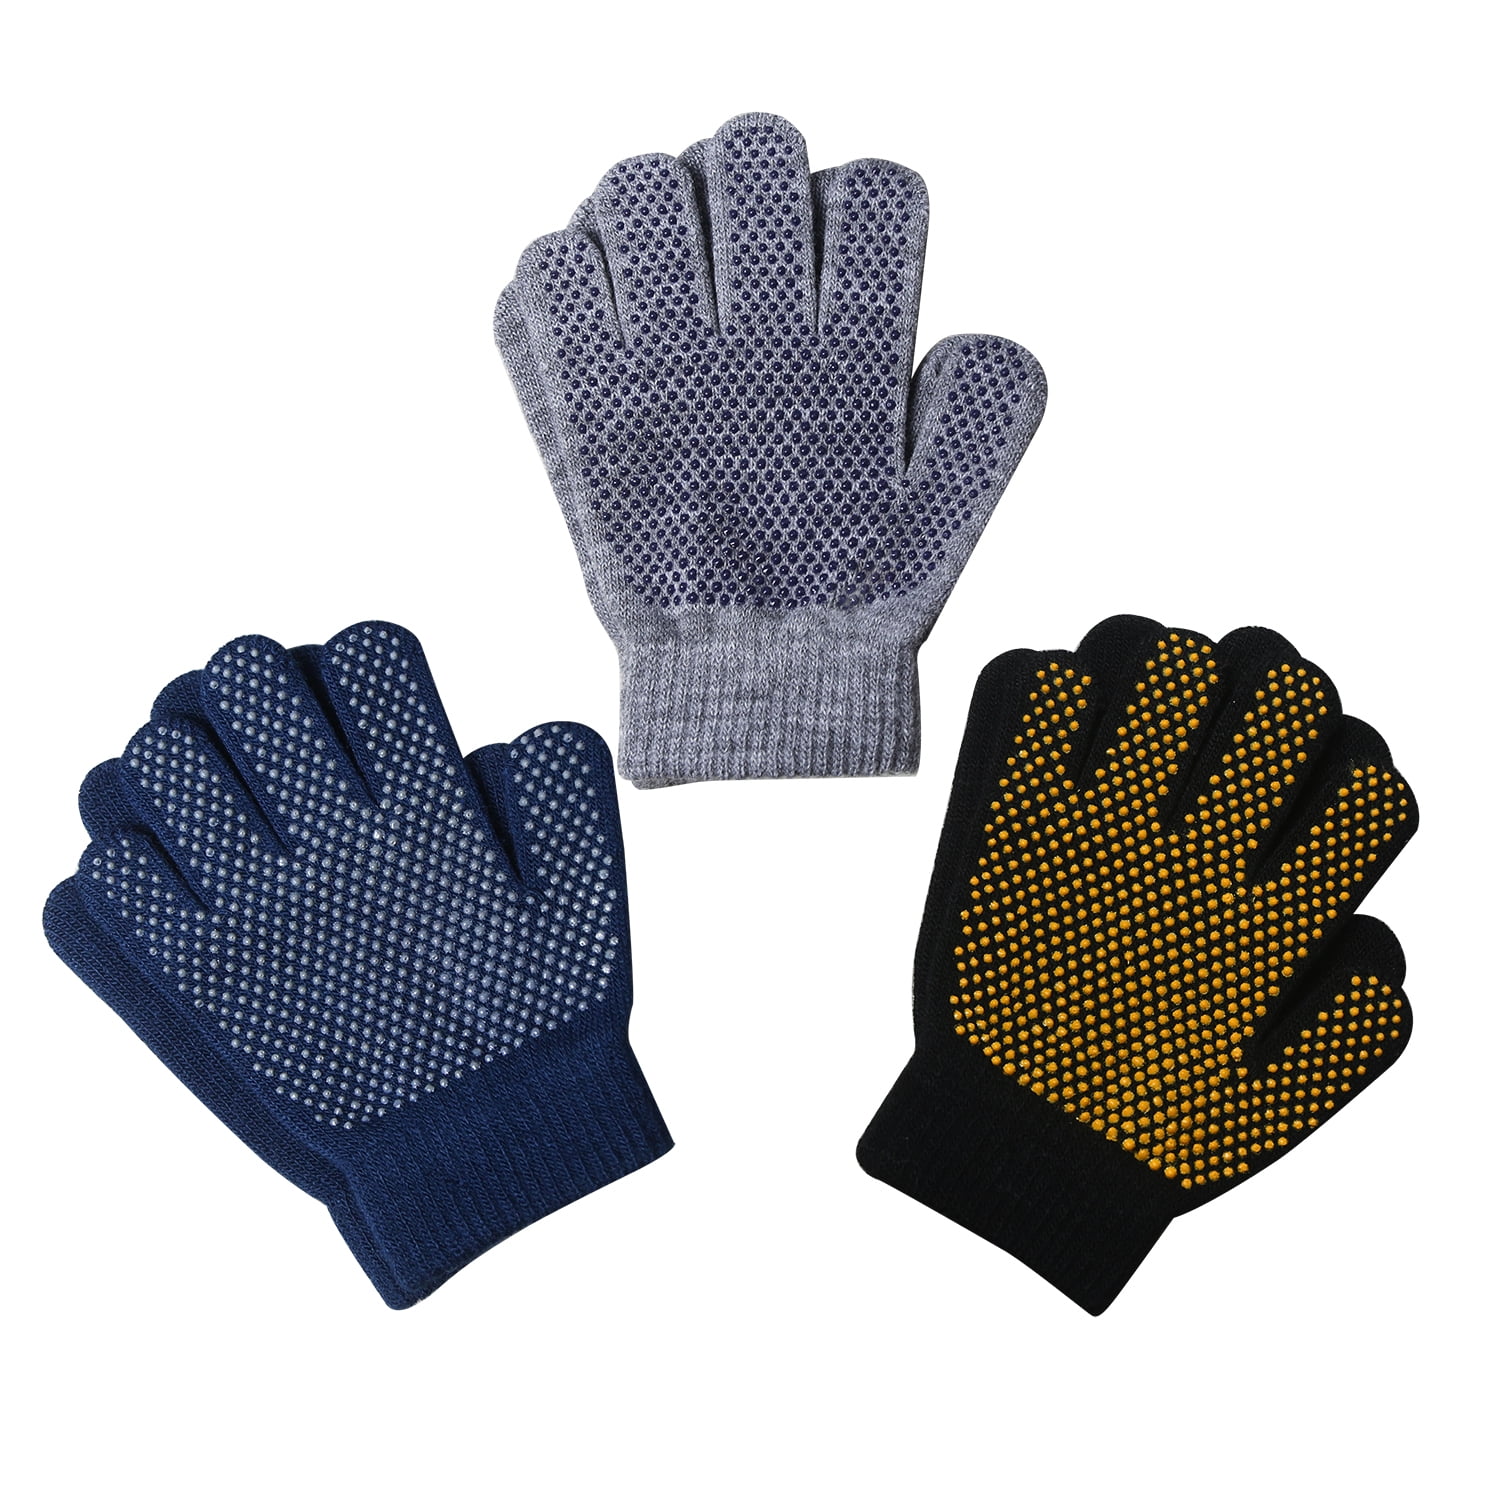 EvridWear Boys Girls Magic Stretch Gripper Gloves 3 Pair Pack (Dot